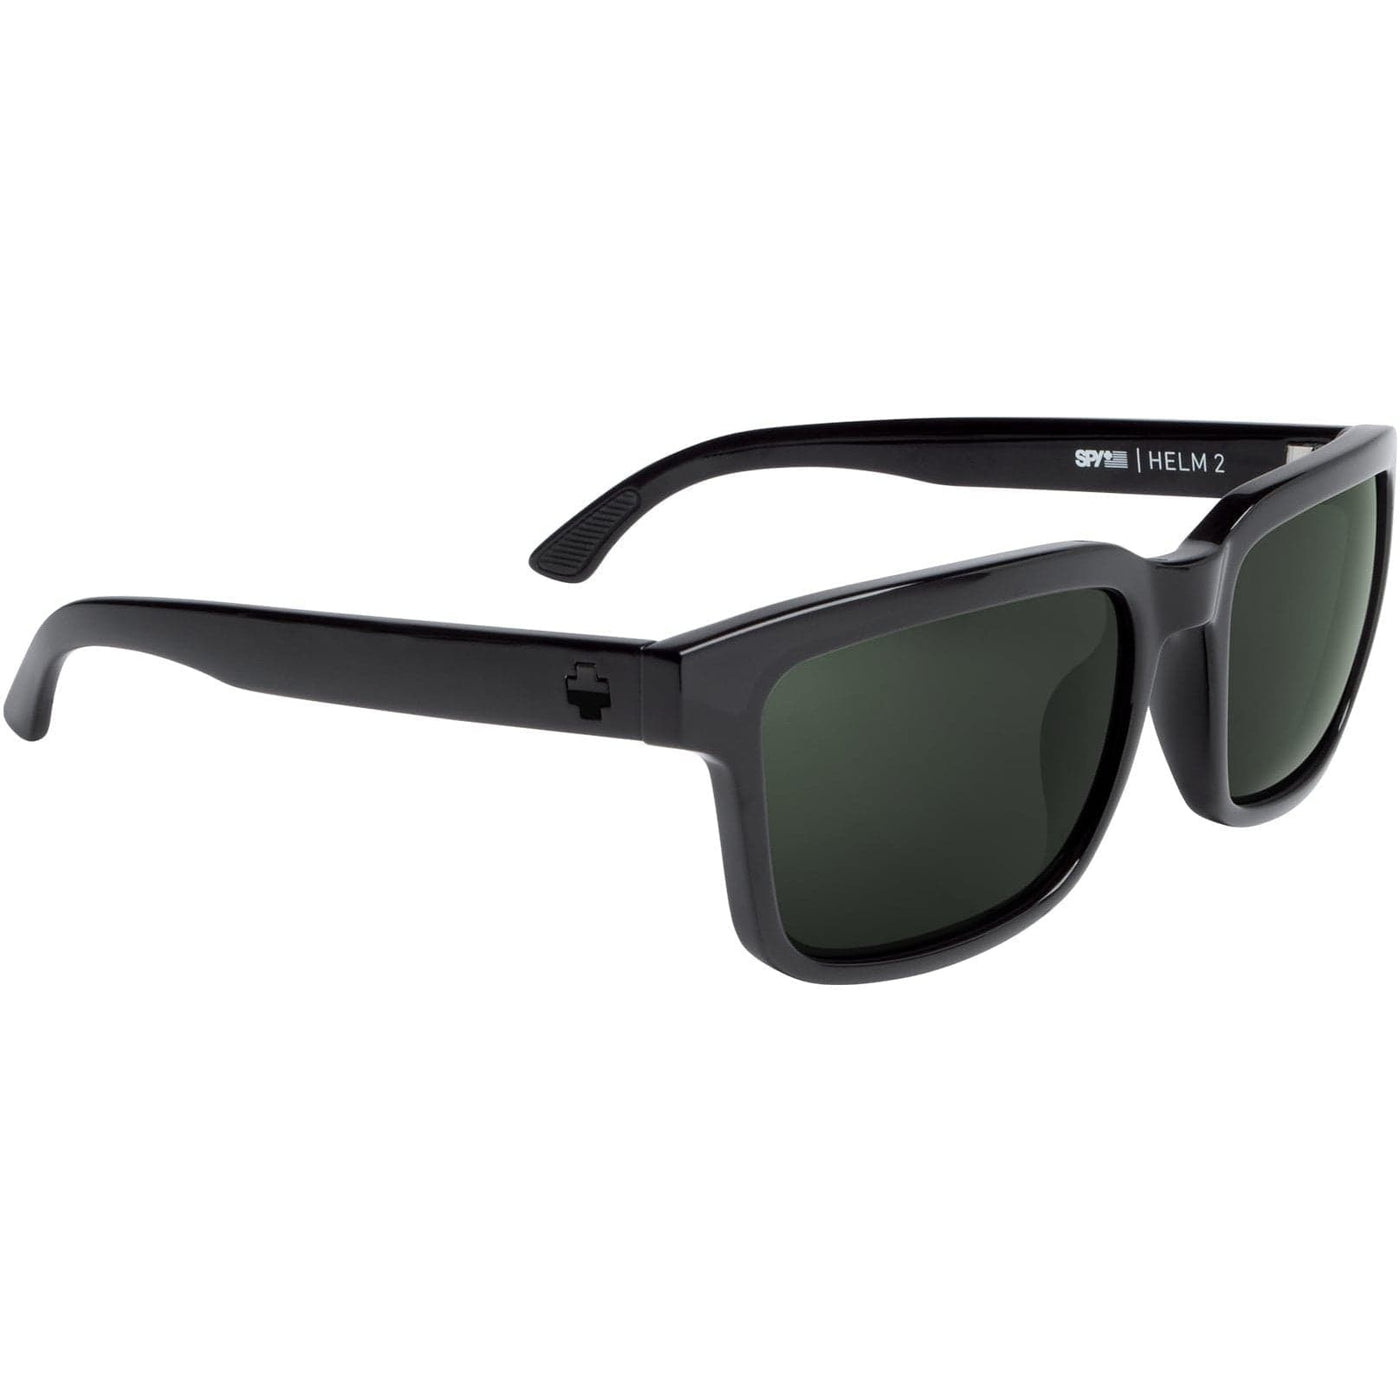 SPY HELM 2 Sunglasses, Happy Lens - SOSI Gloss Black 8Lines Shop - Fast Shipping